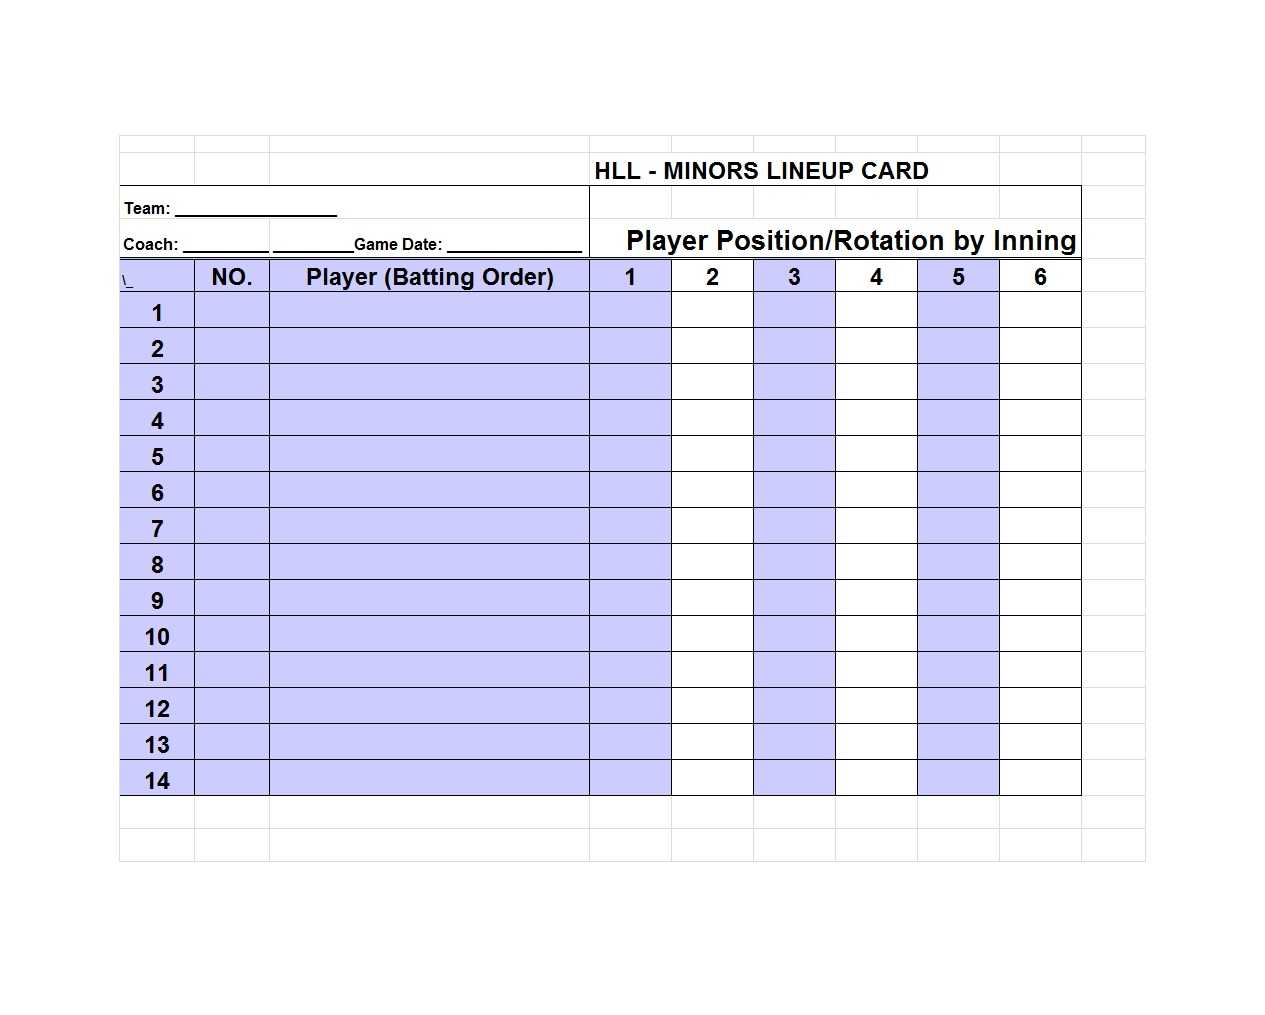 33 Printable Baseball Lineup Templates [Free Download] ᐅ Regarding Free Baseball Lineup Card Template